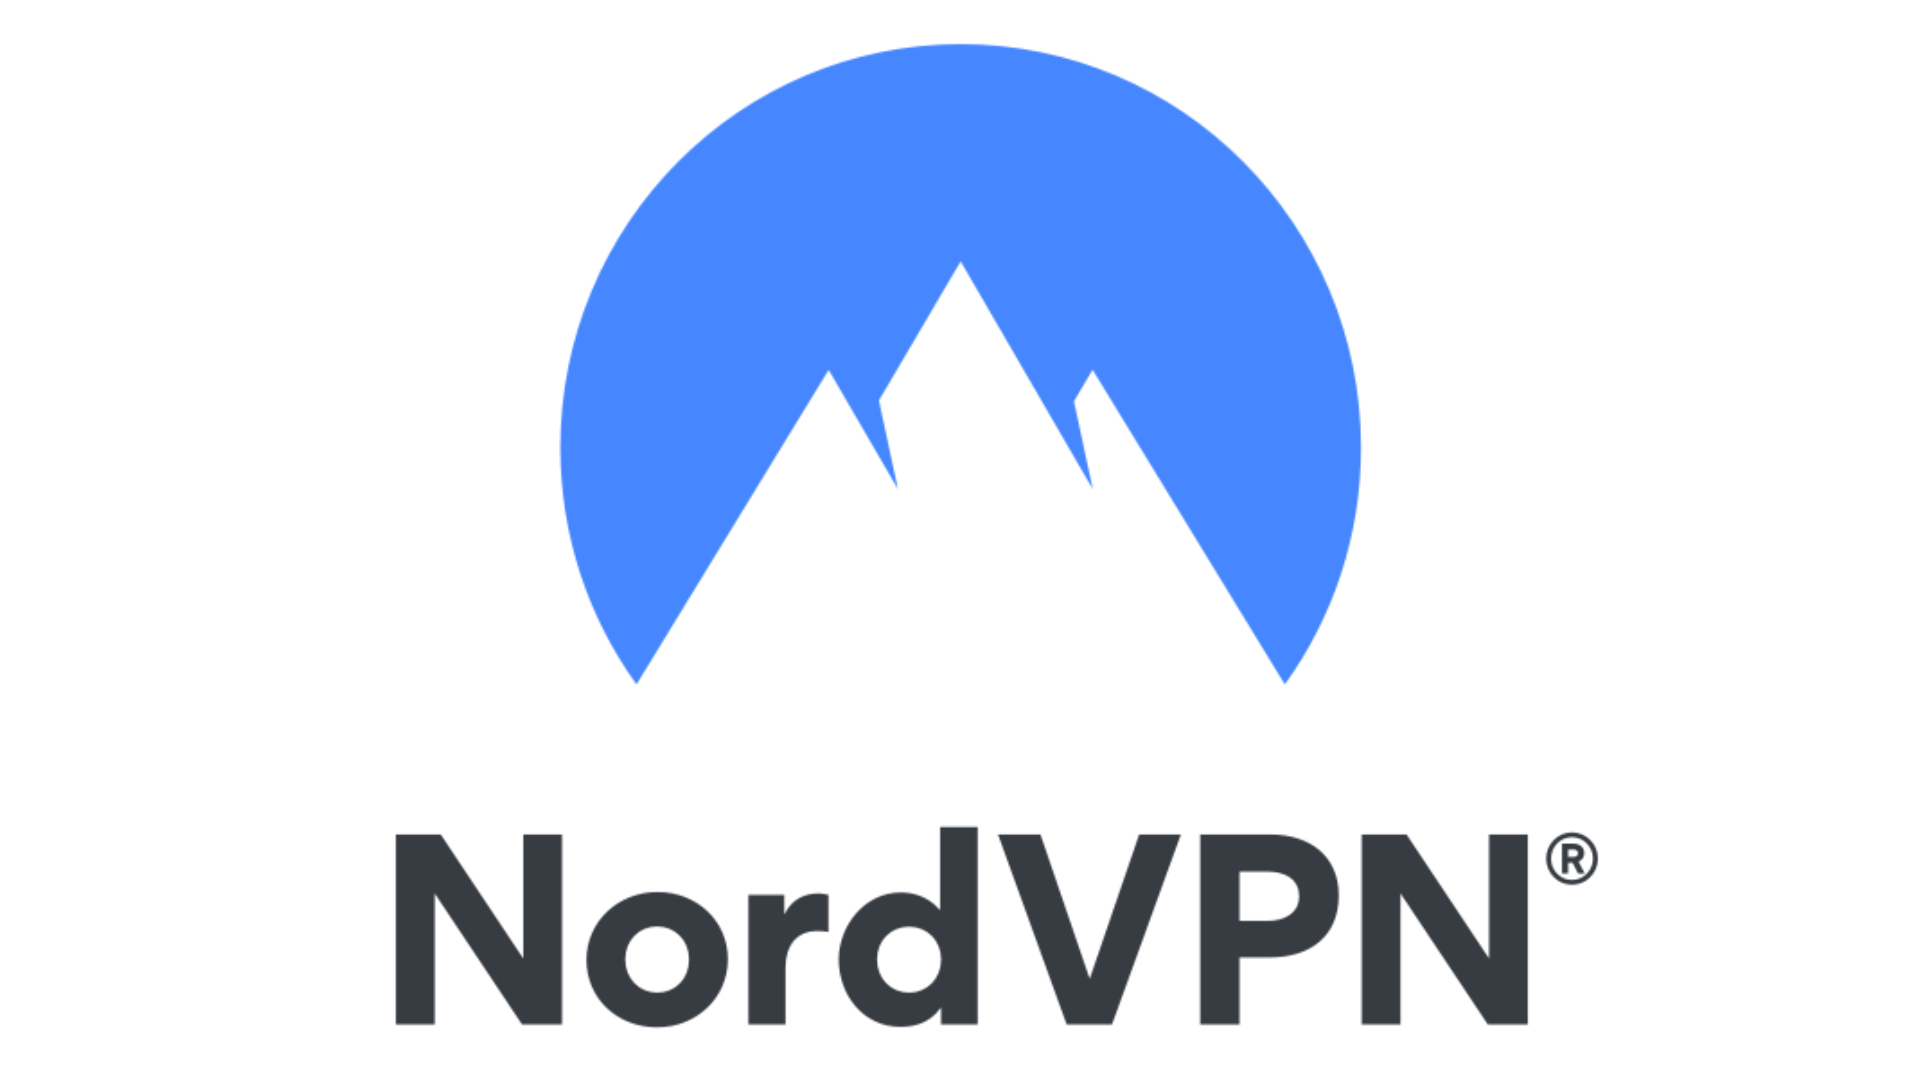 The best VPN for gaming: NordVPN's blue mountain logo pops against a white background